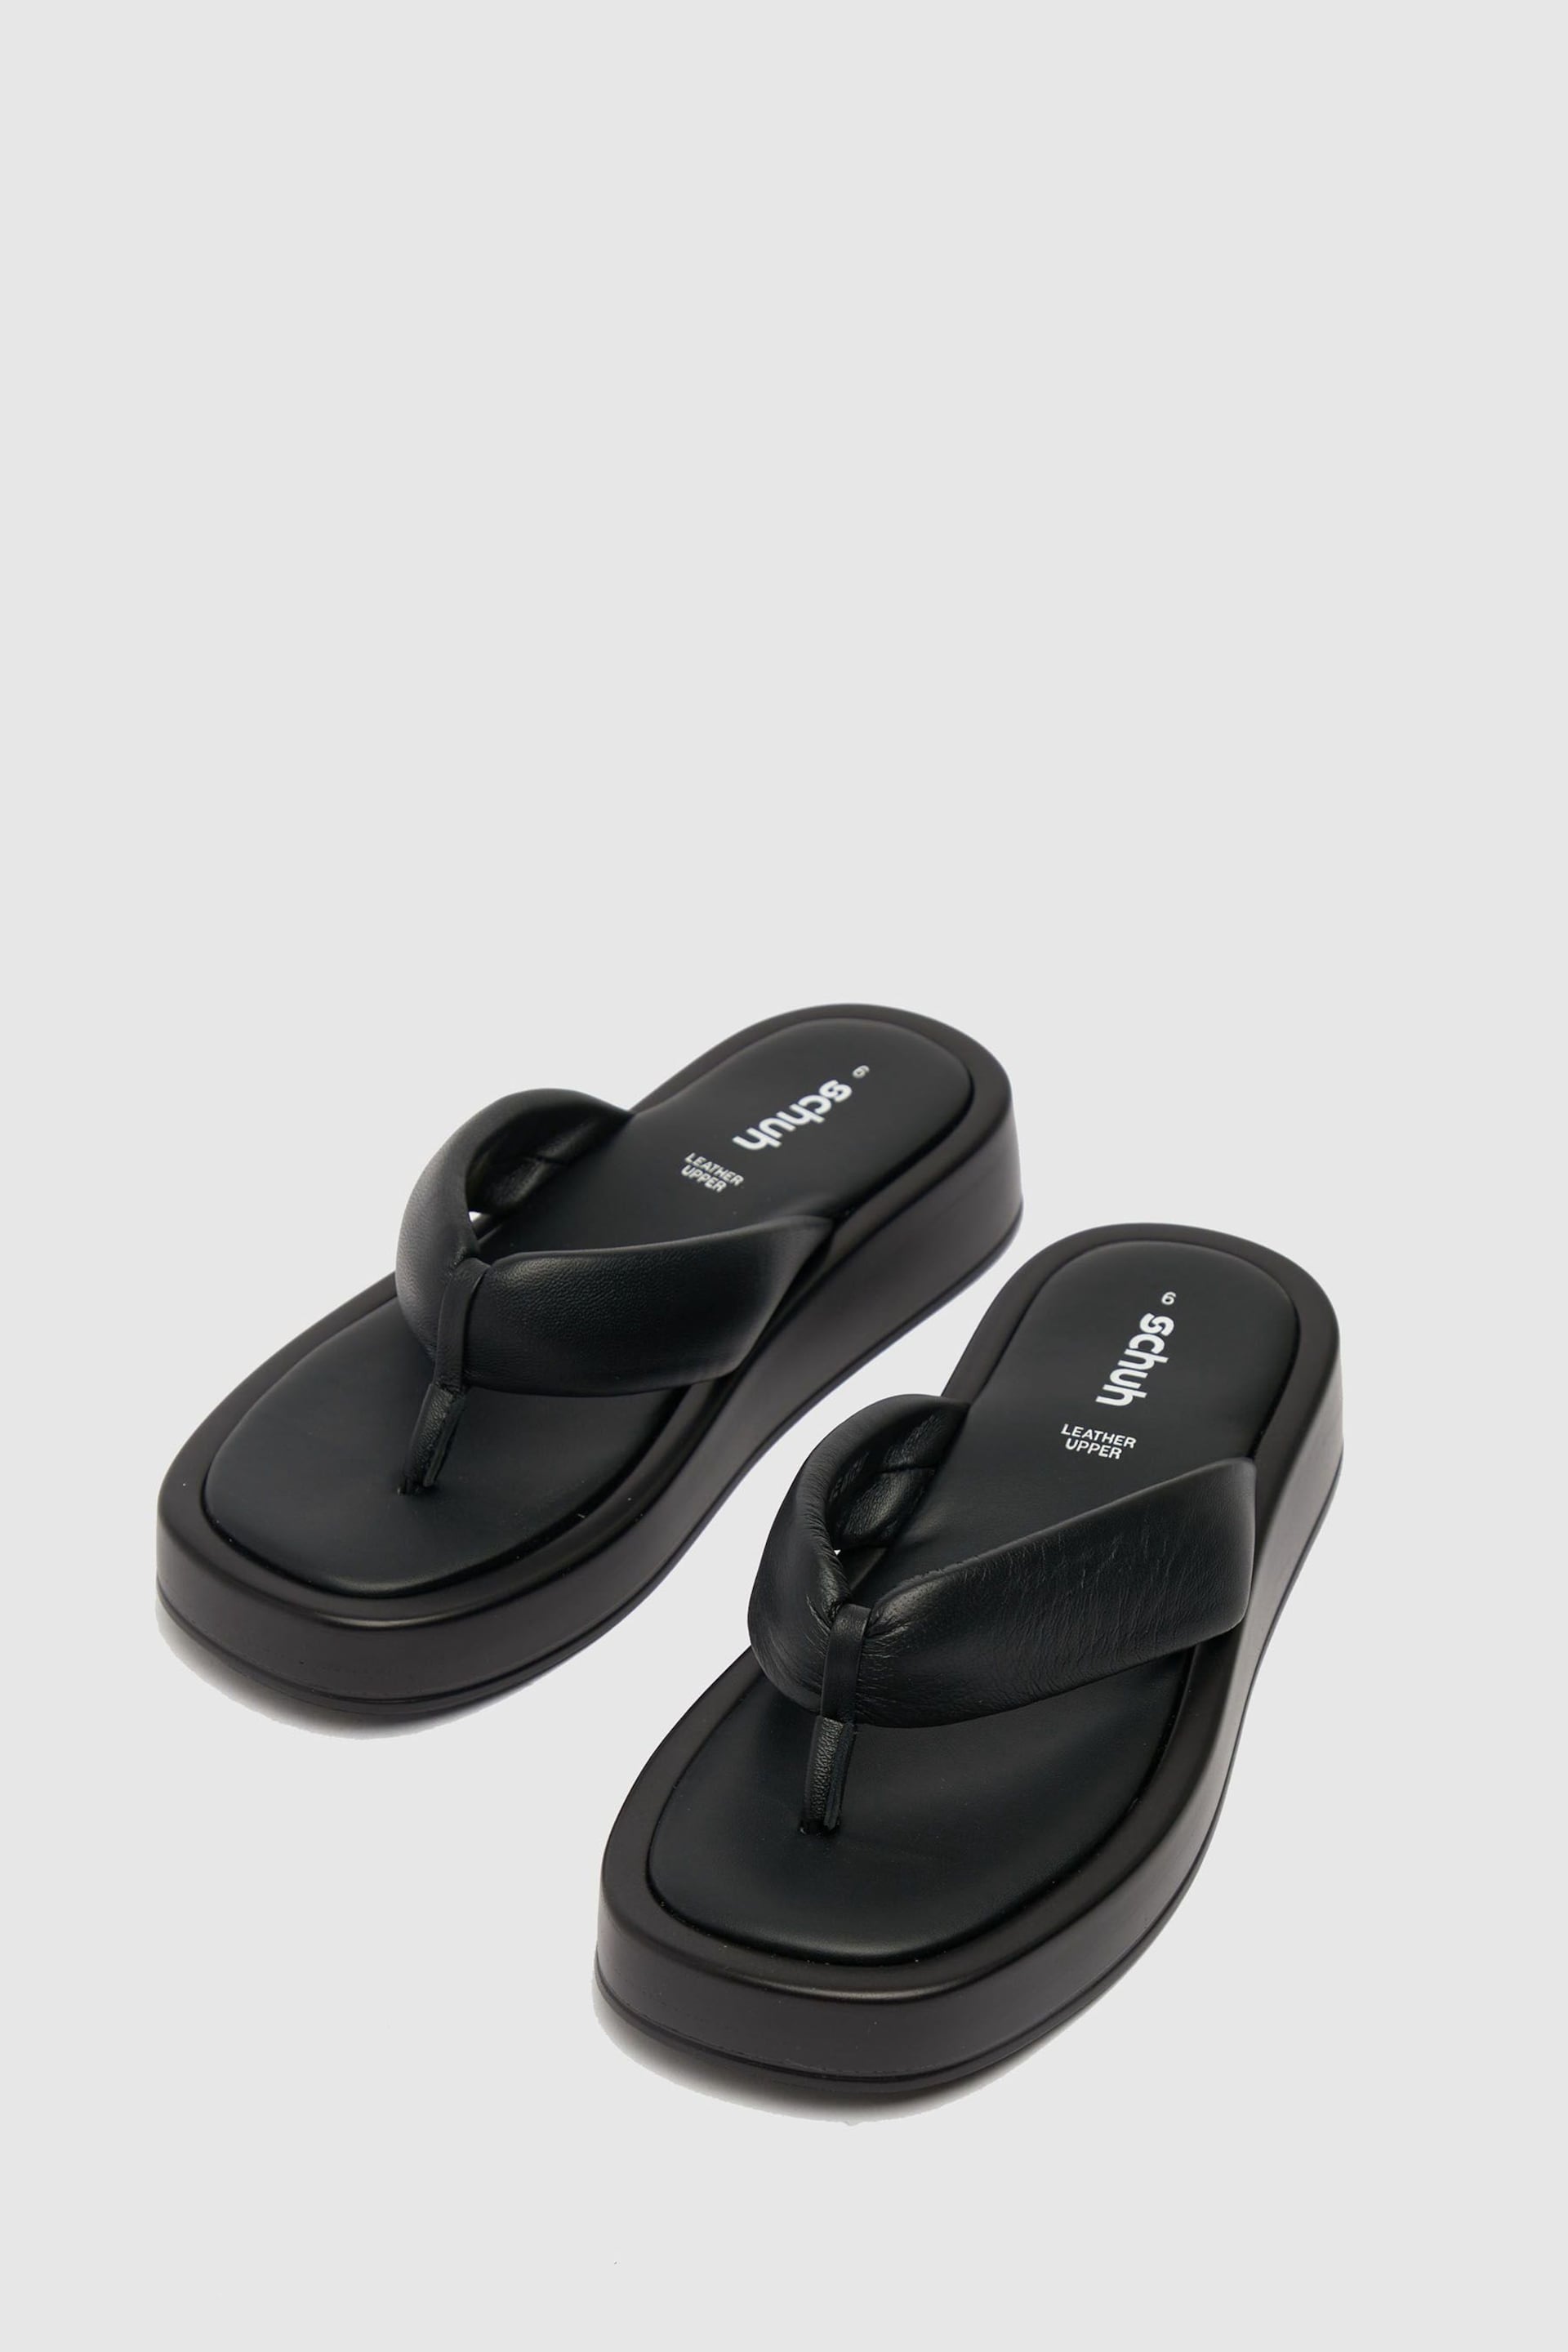 Schuh Tonya Flatform Black Toe Thong - Image 4 of 4